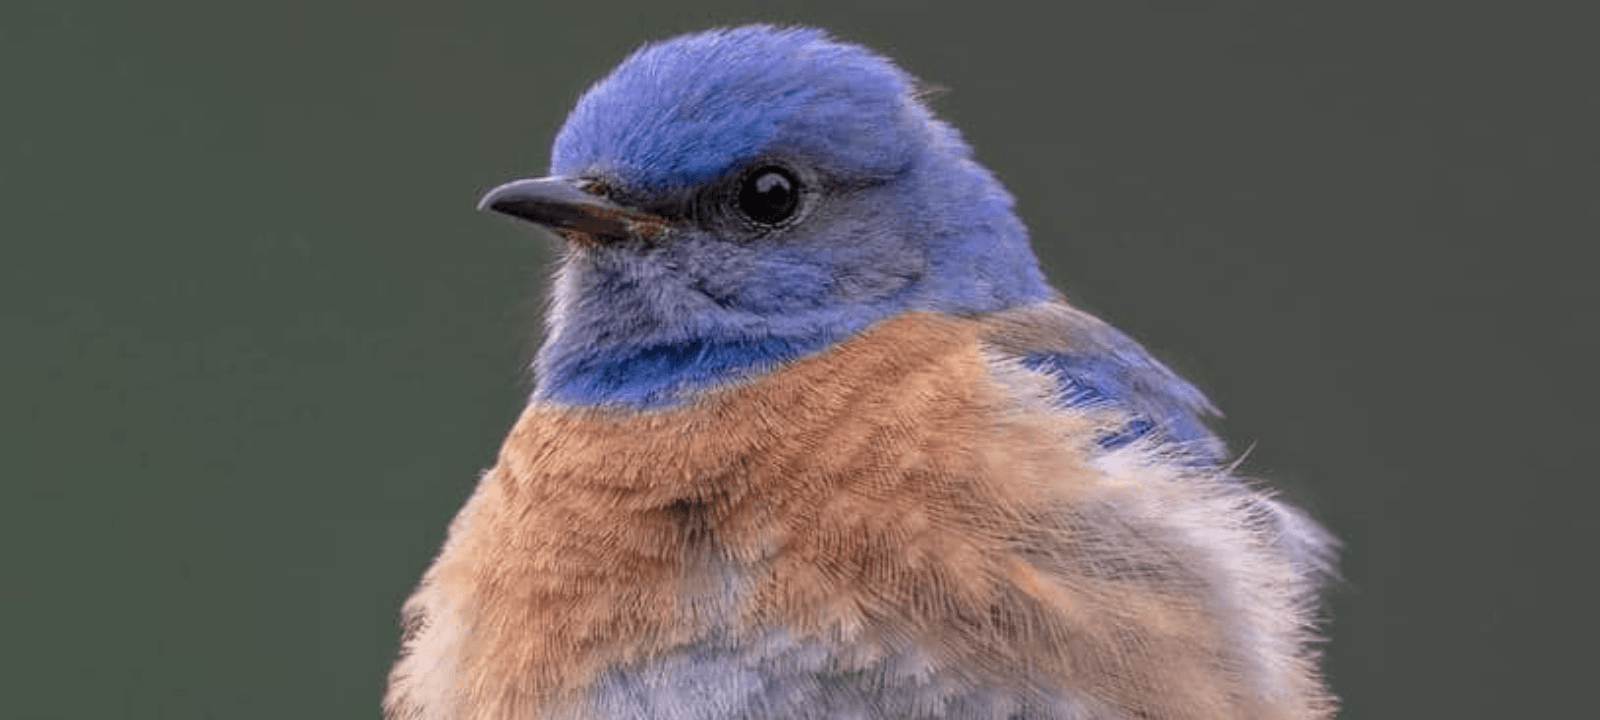 California Bluebird Recovery Program